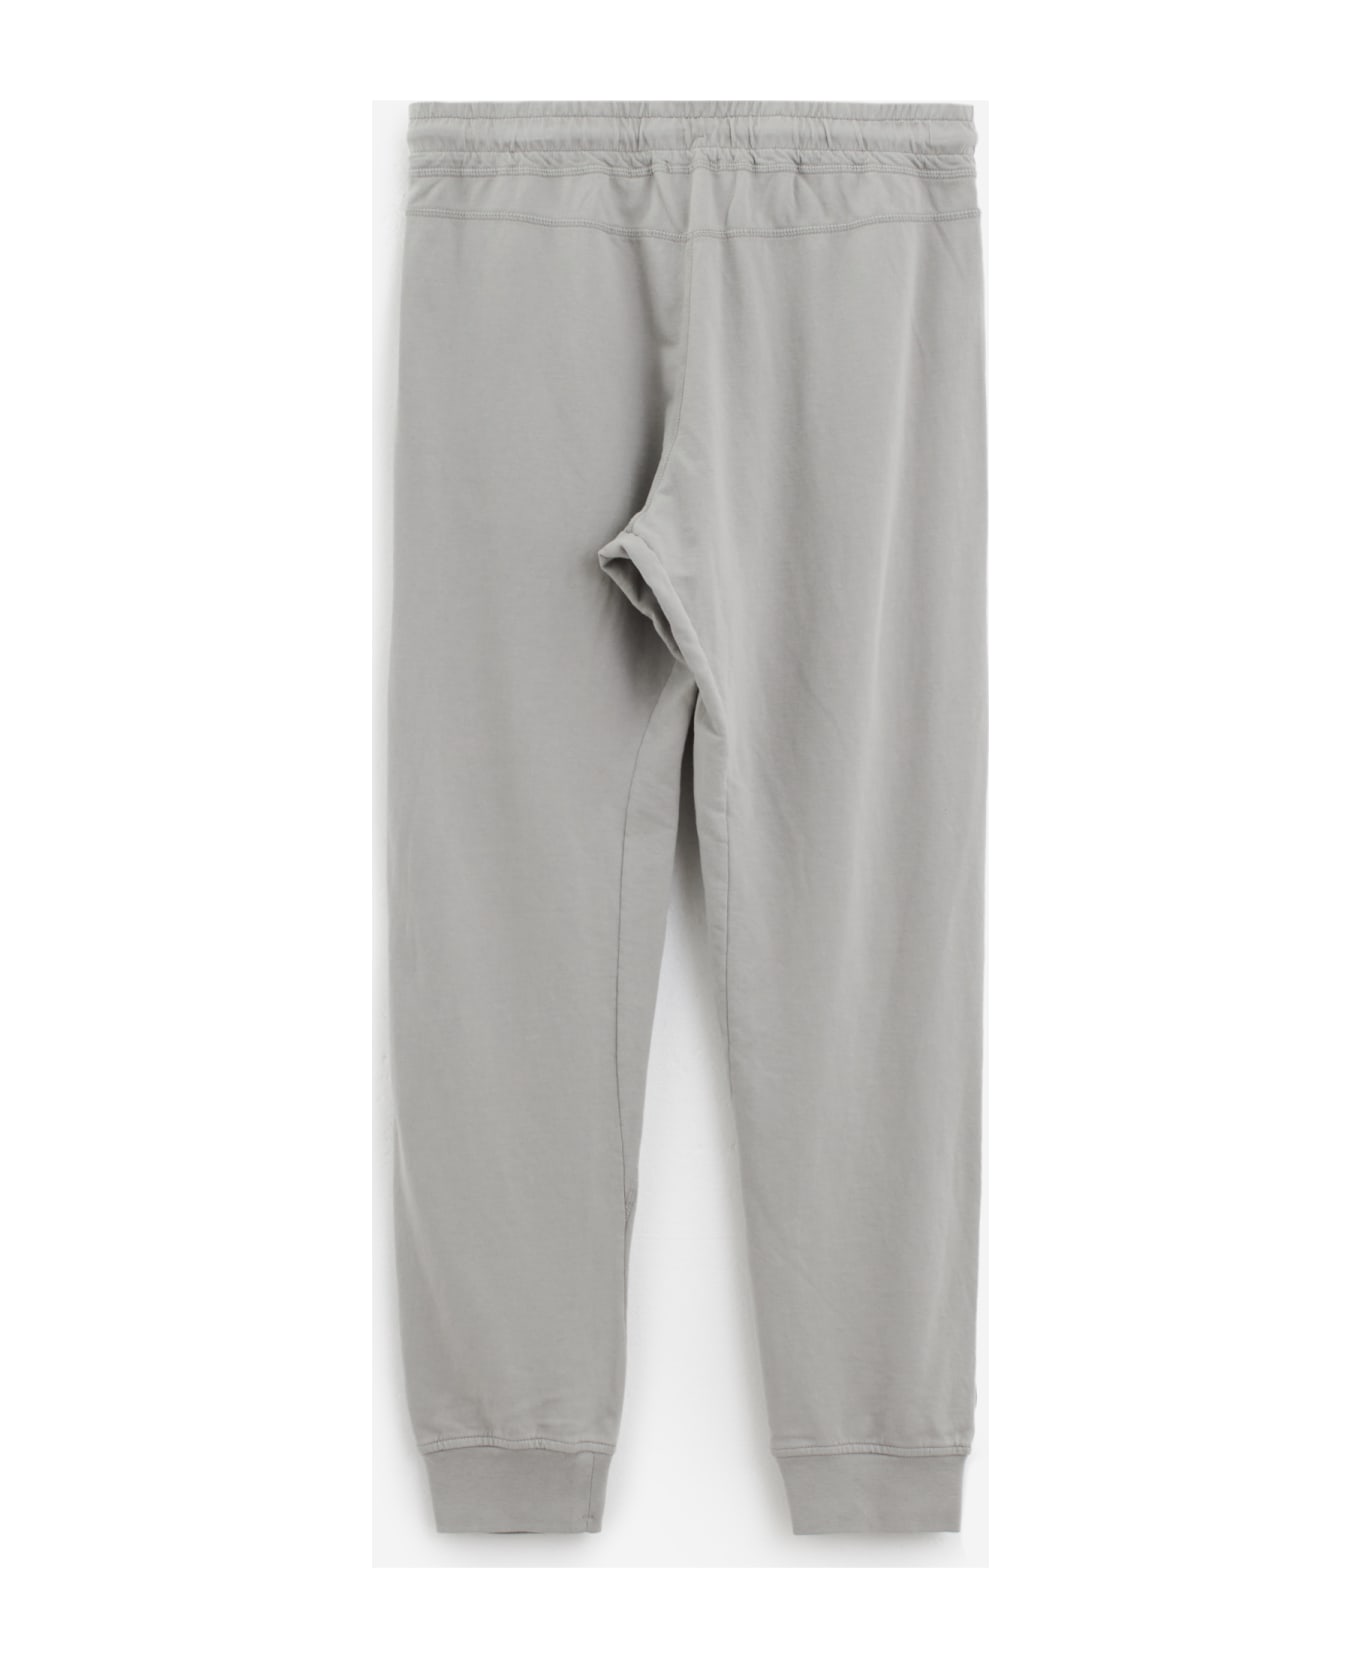 C.P. Company Pants - grey スウェットパンツ